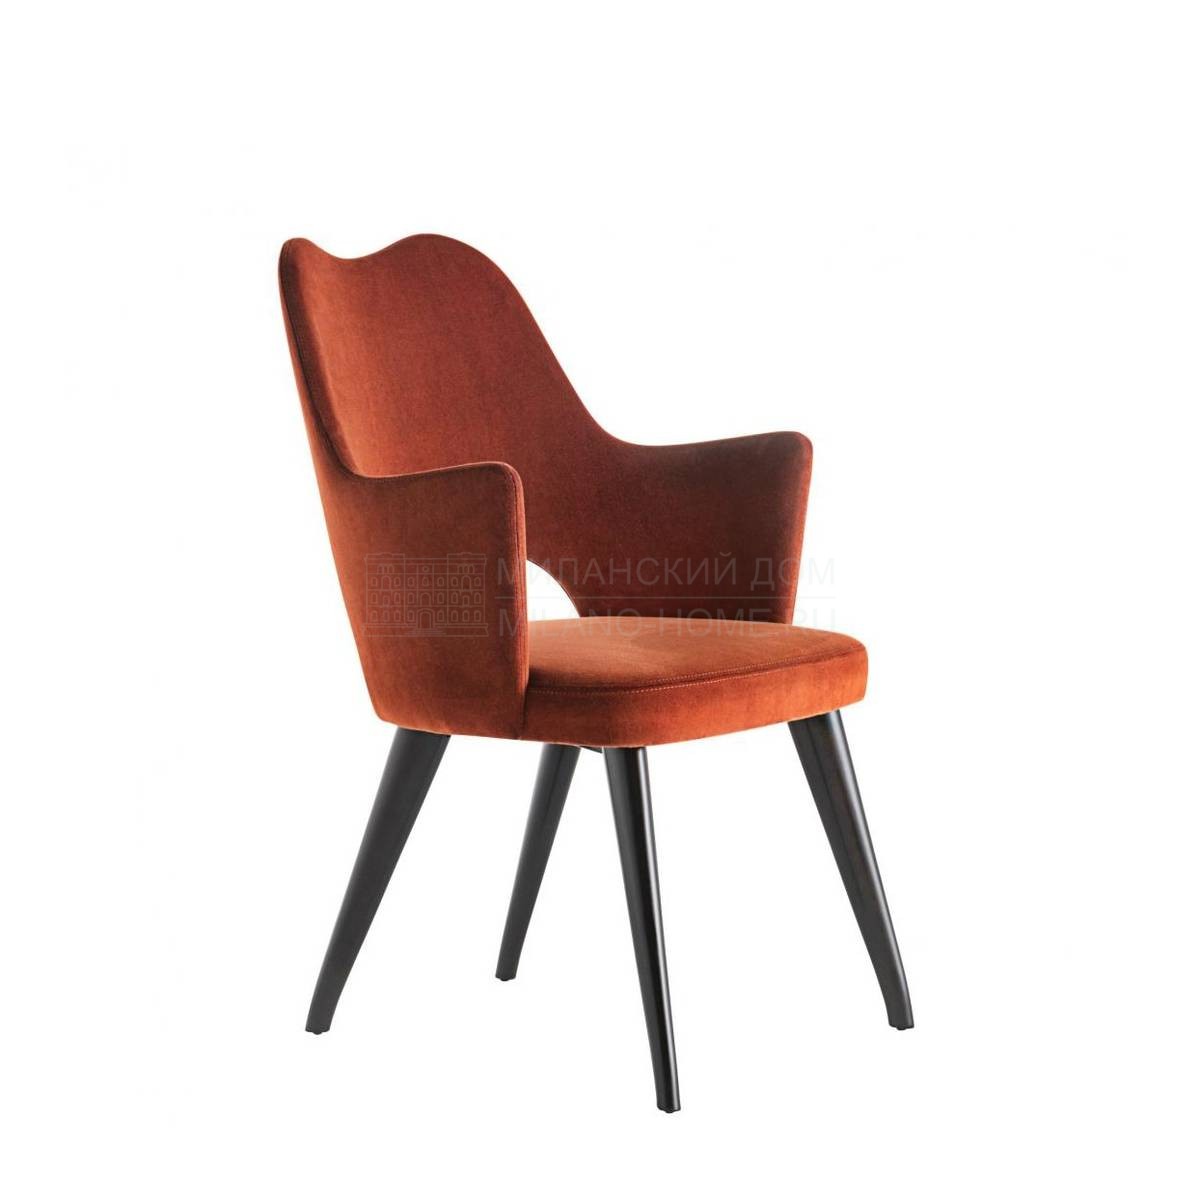 Полукресло Nuvolari Arm Chair из Италии фабрики RUBELLI Casa